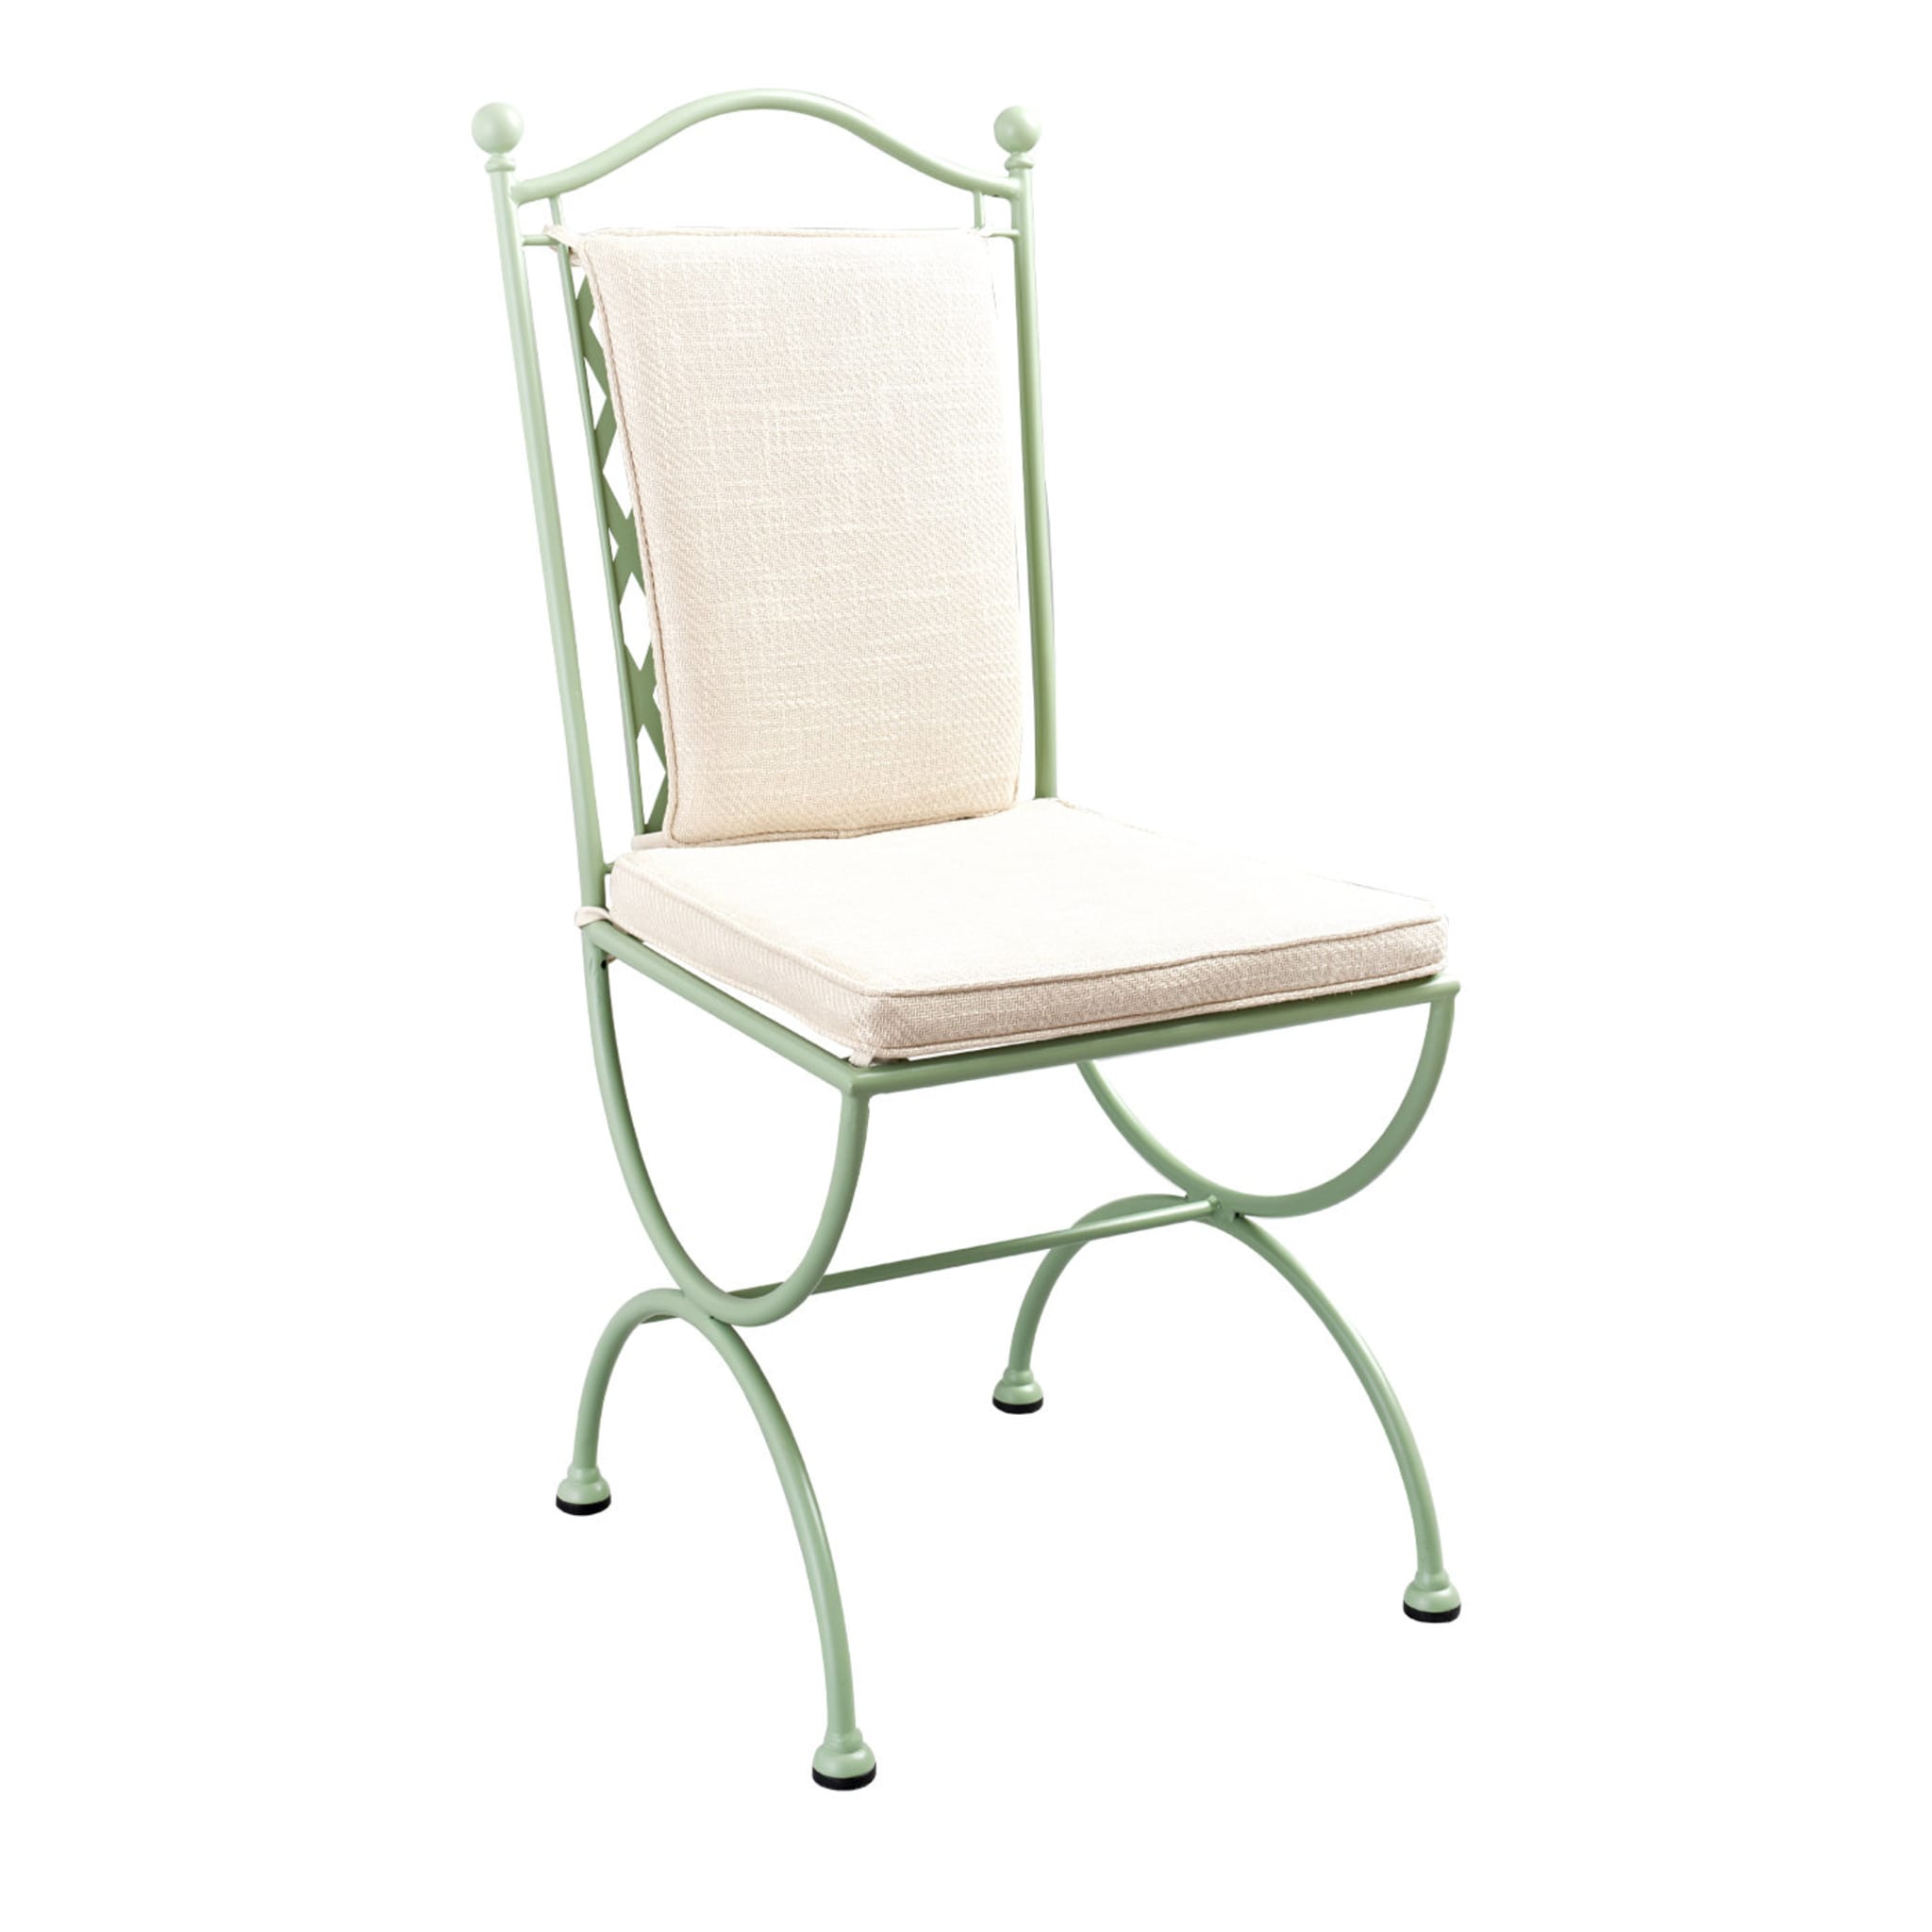 Rombi Outdoor Green Wrought Iron Chair - Main view